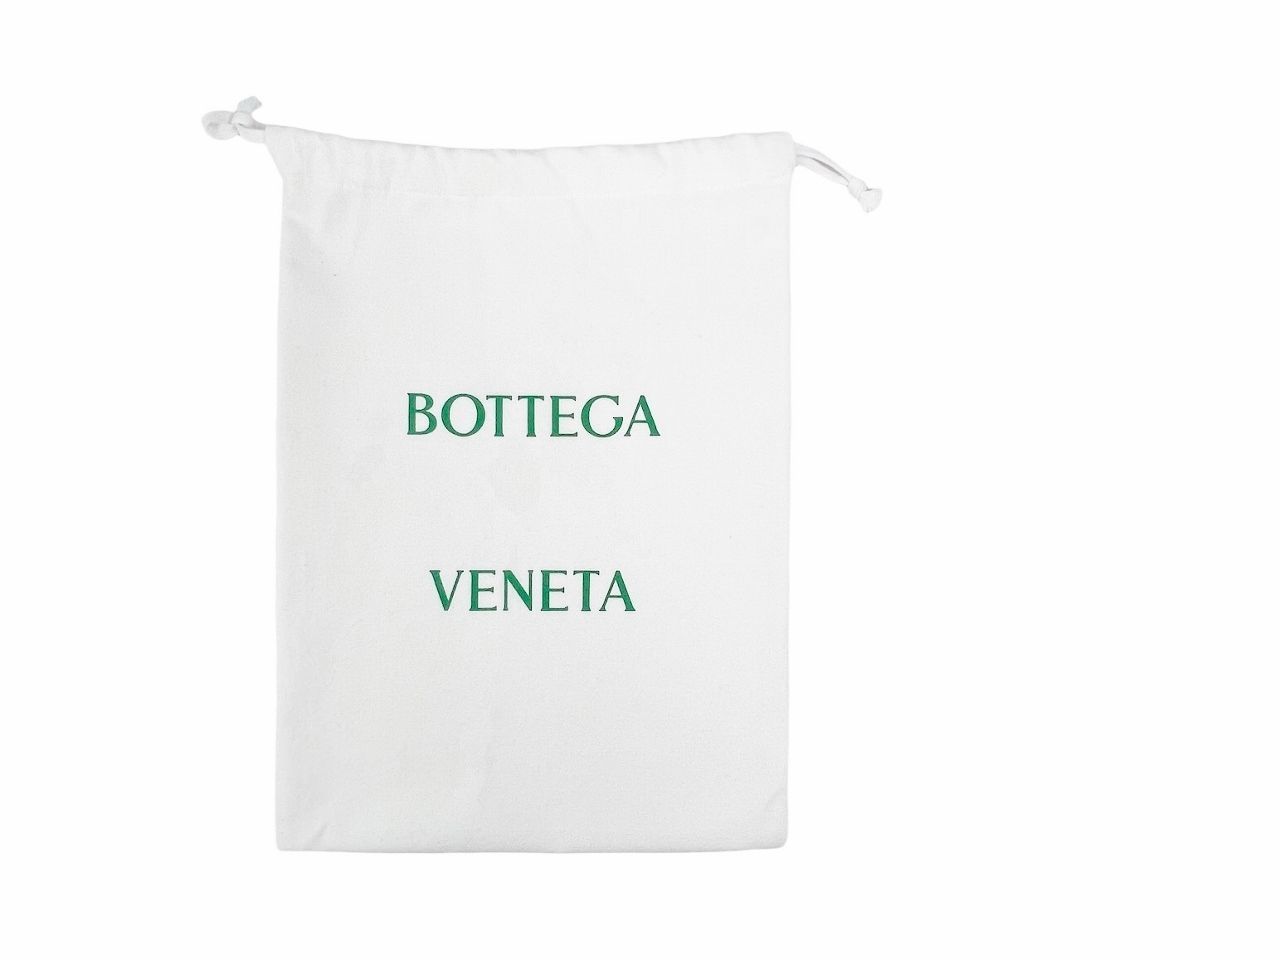 BOTTEGA VENETA ボッテガ ヴェネタ 手袋 グローブ ユニセックス 羊毛